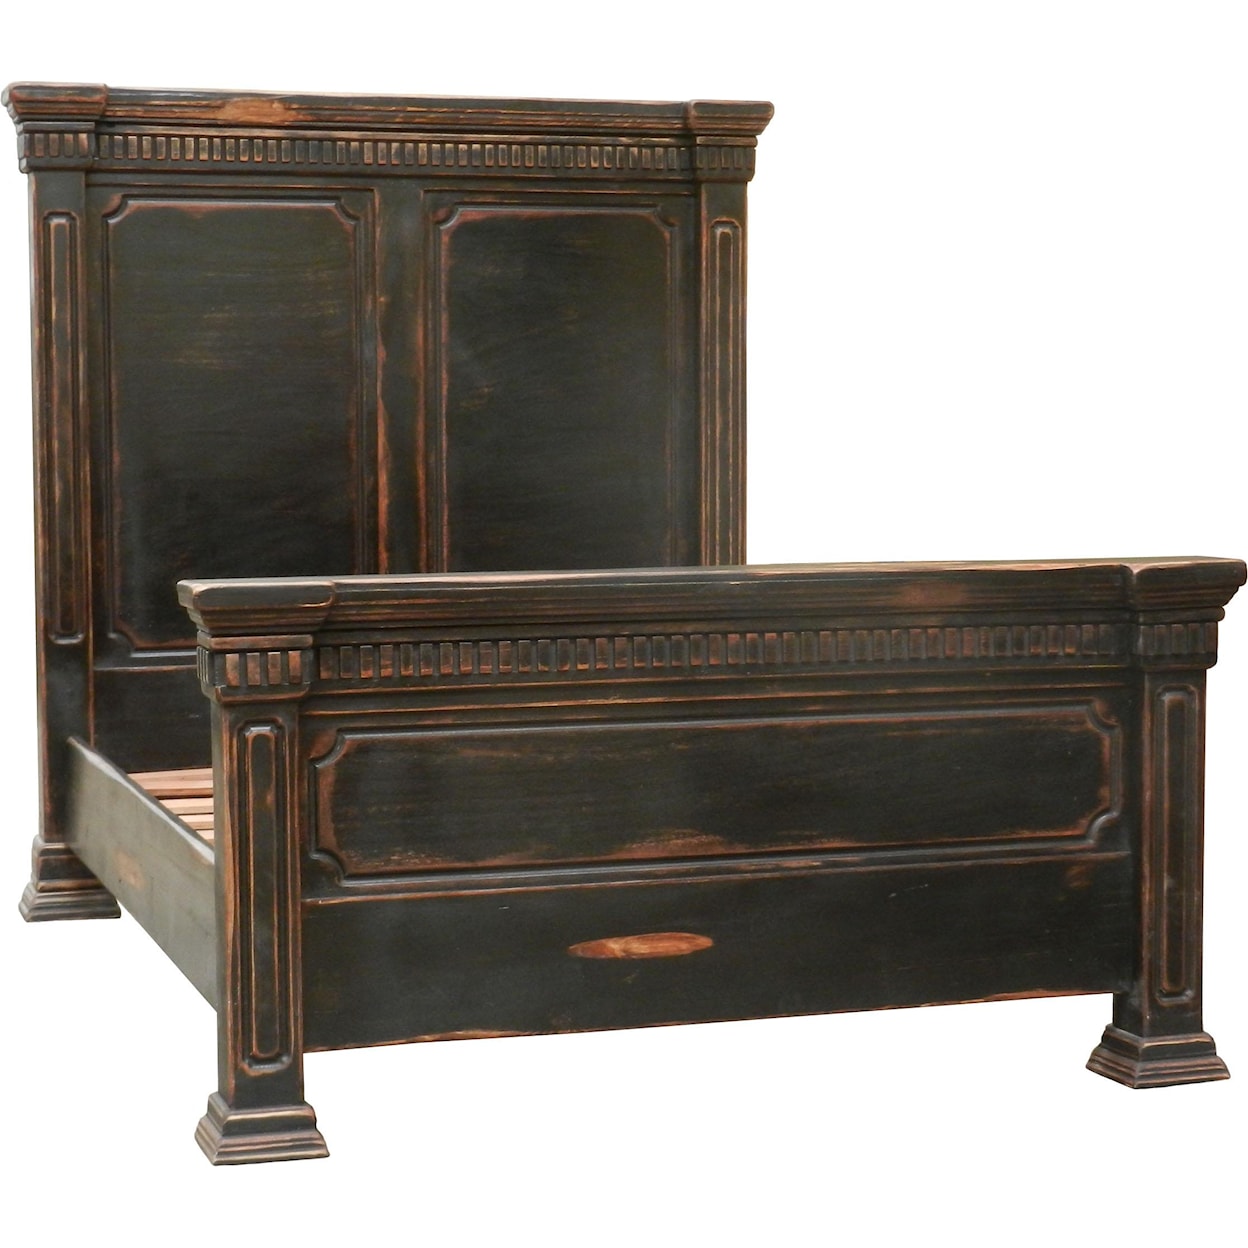 Furniture Source International Easton Queen Bed